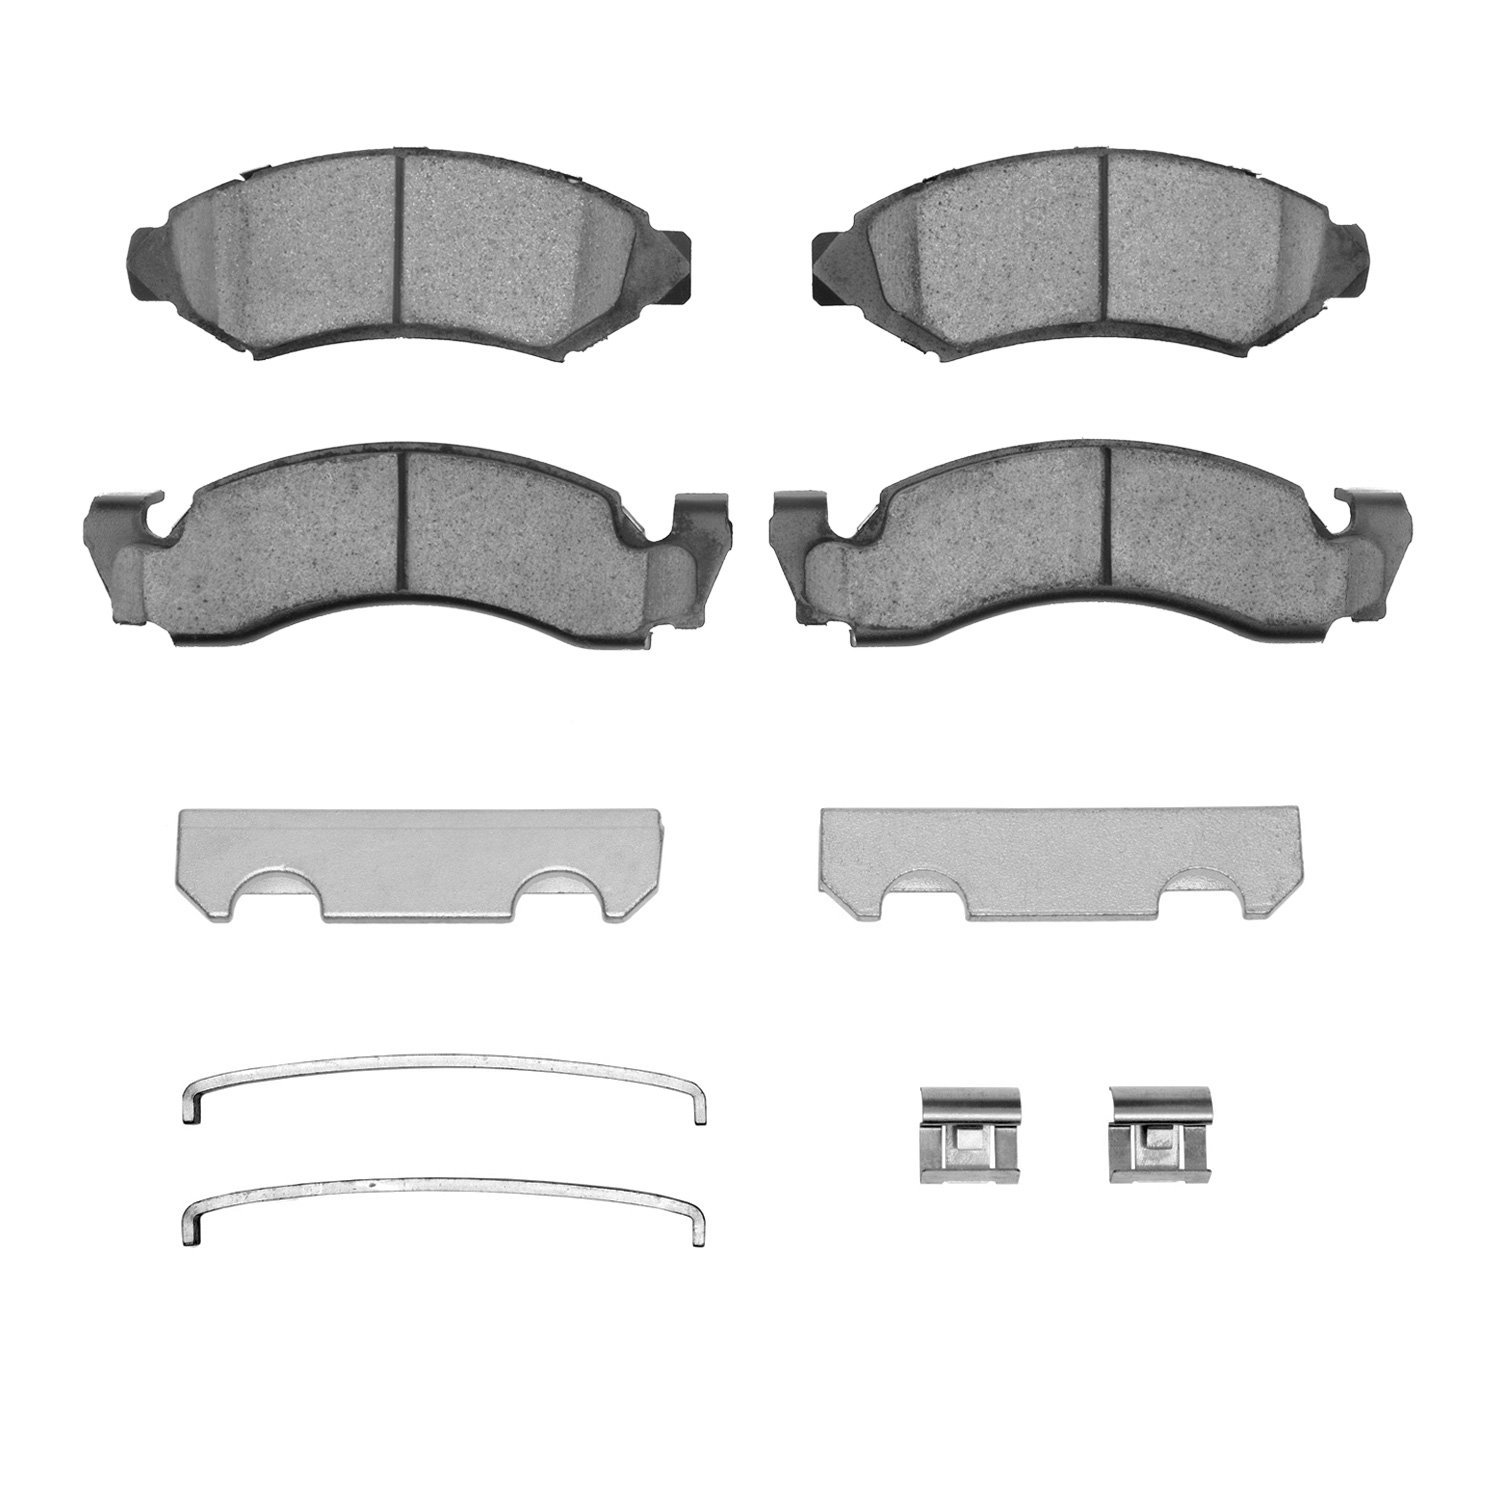 Semi-Metallic Brake Pads & Hardware Kit, 1973-1985 Fits Multiple Makes/Models, Position: Front